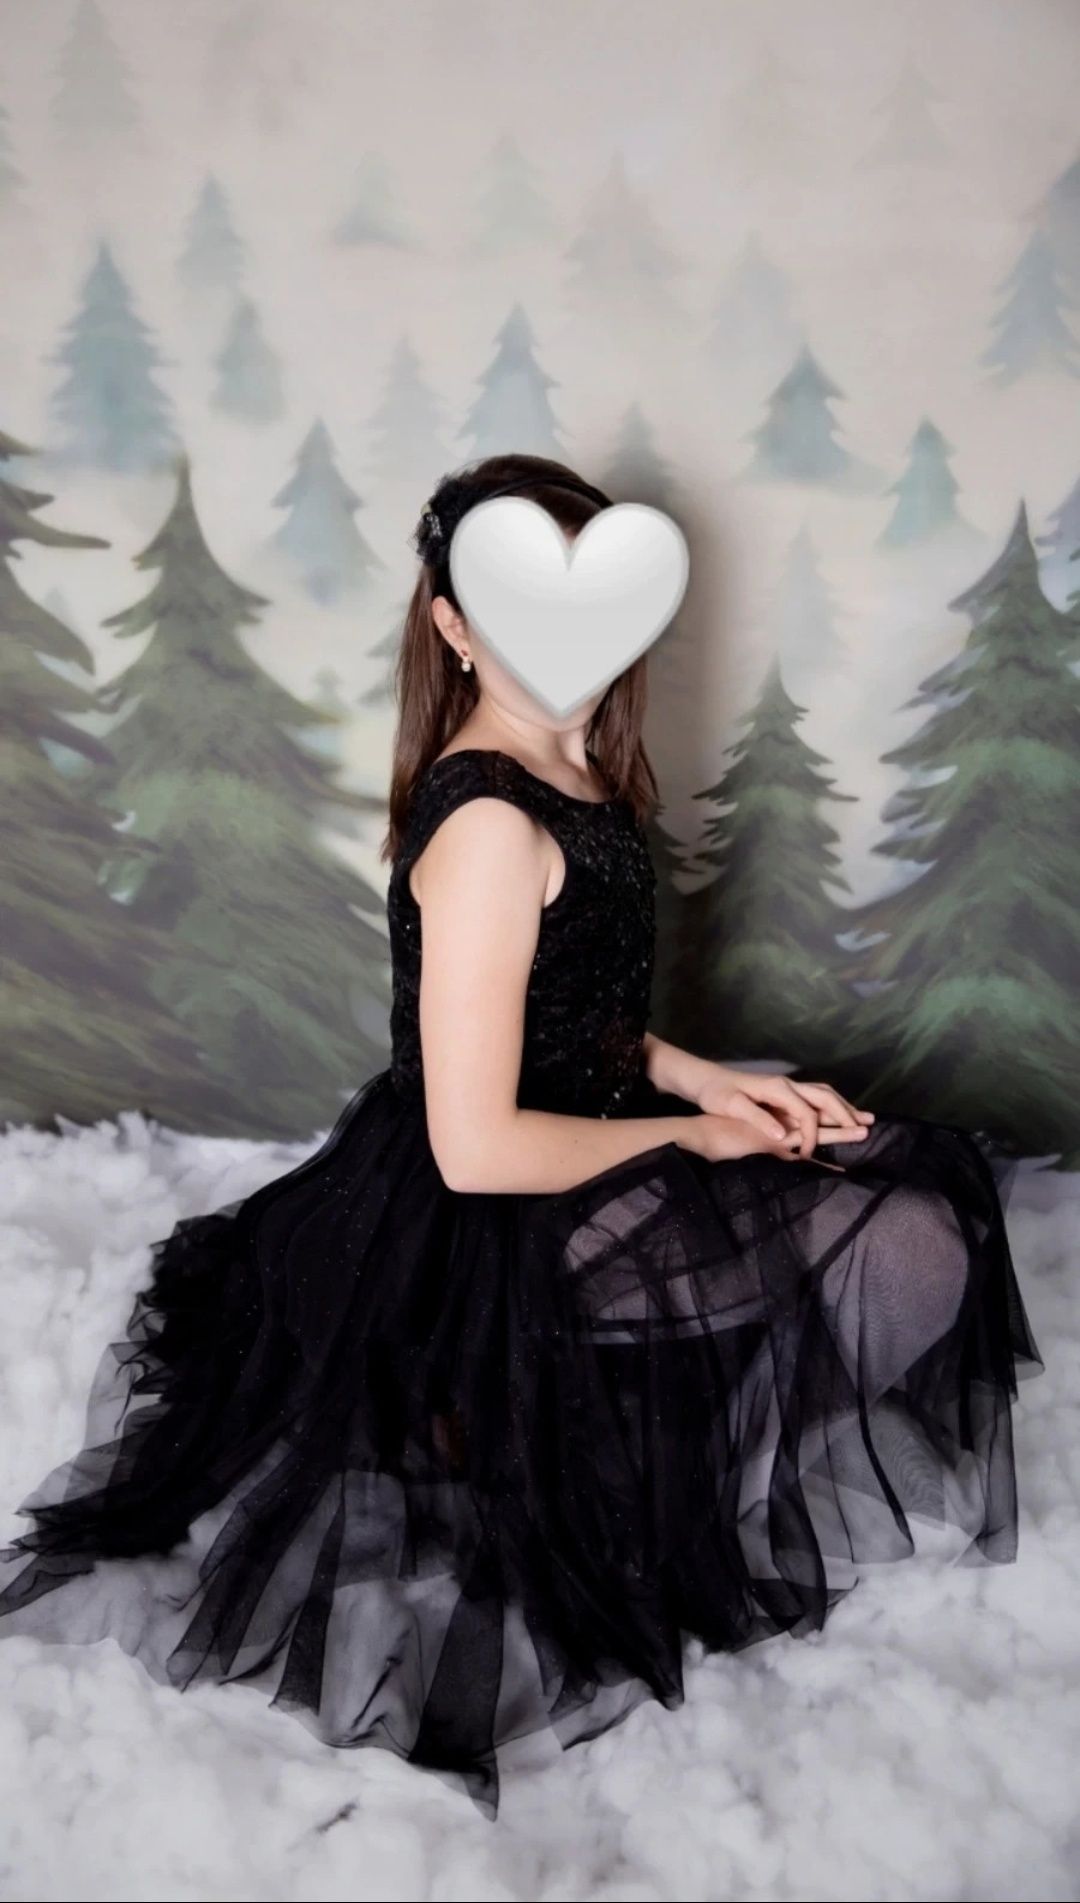 Sukienka czarna tiulowa rozmiar 170